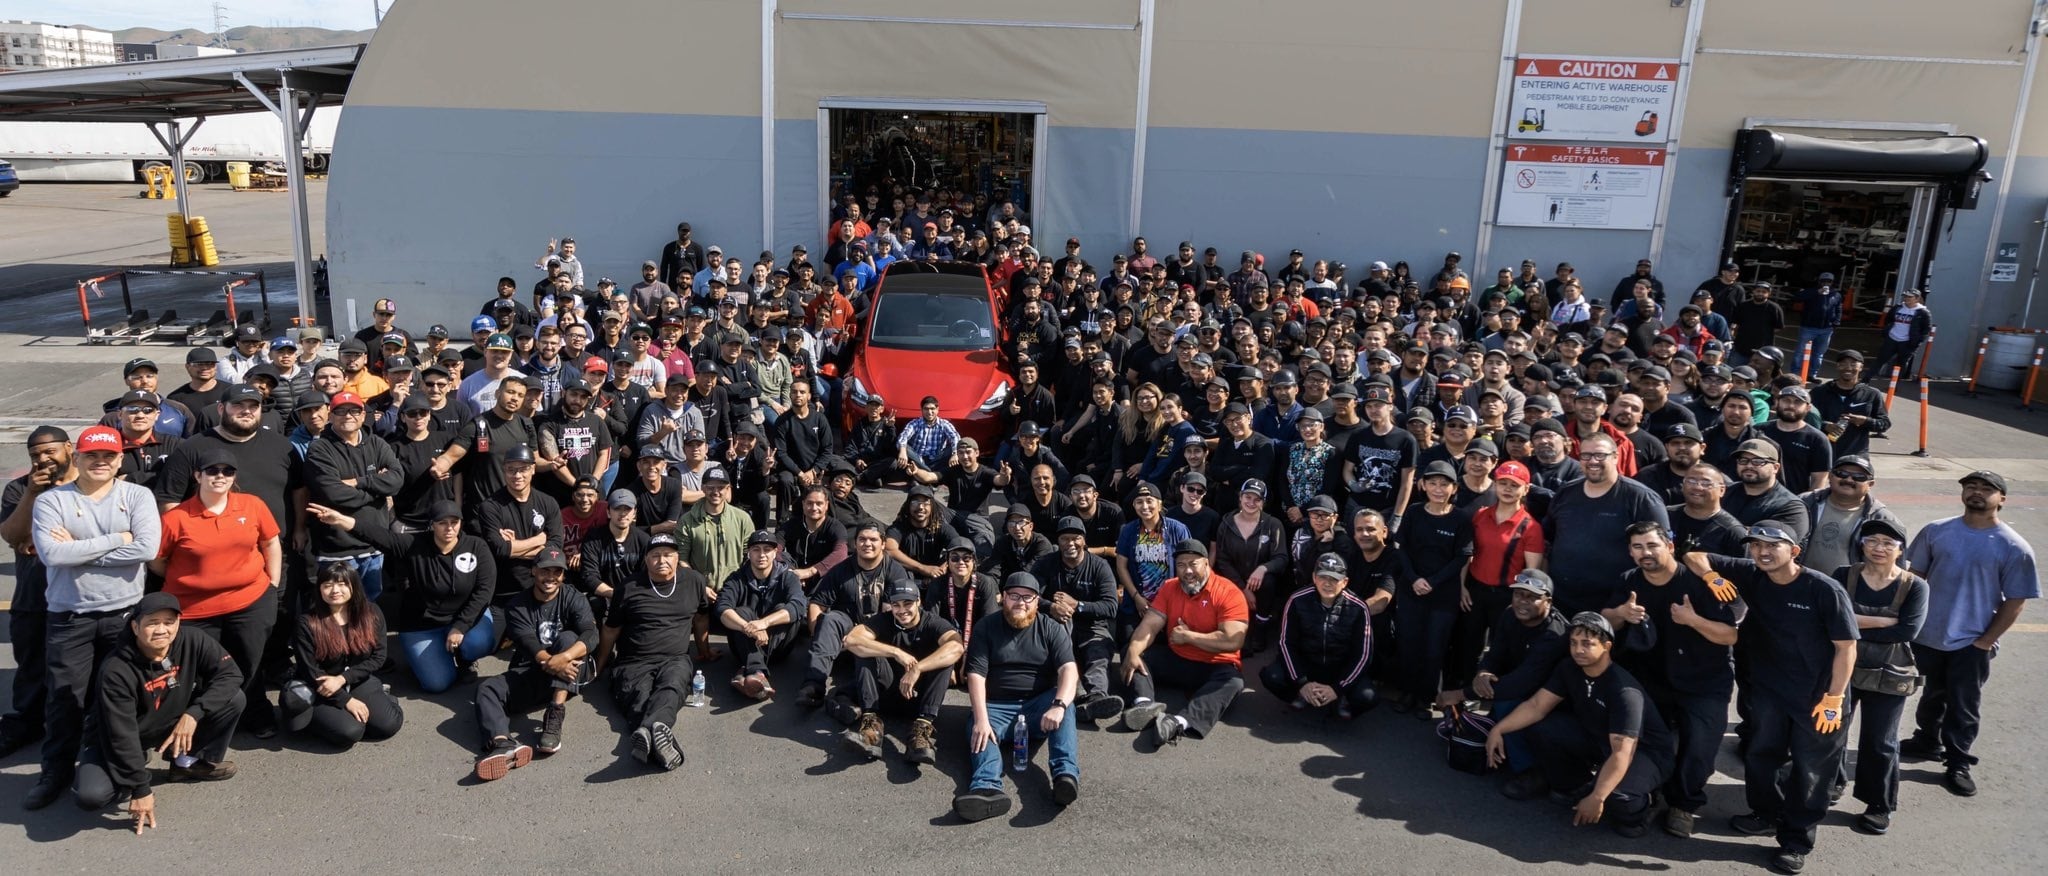 Tesla Manufactures 1,000,000th Vehicle, a Red Tesla Model Y